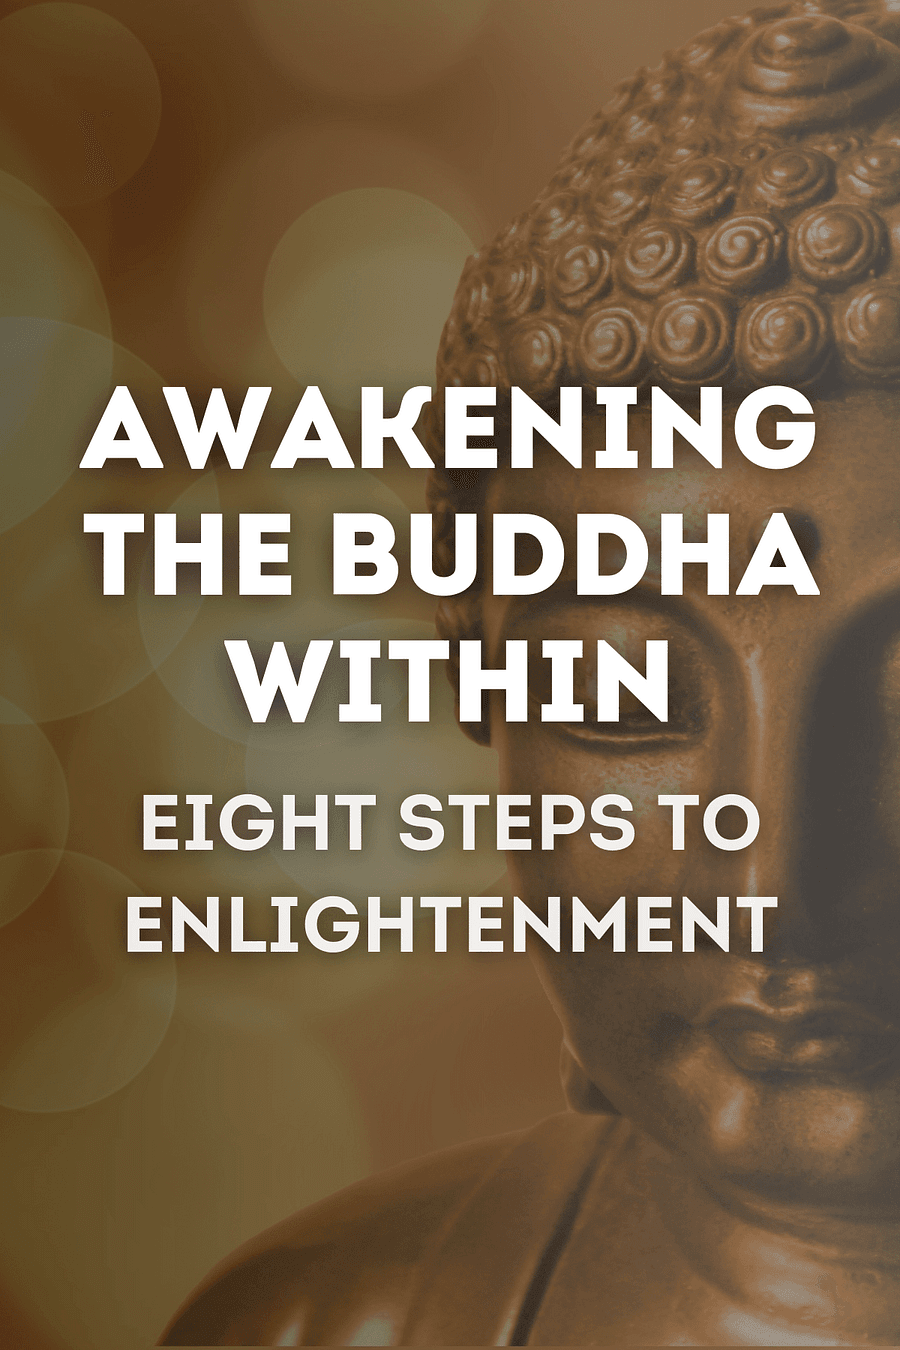 Awakening the Buddha Within by Lama Surya Das - Book Summary